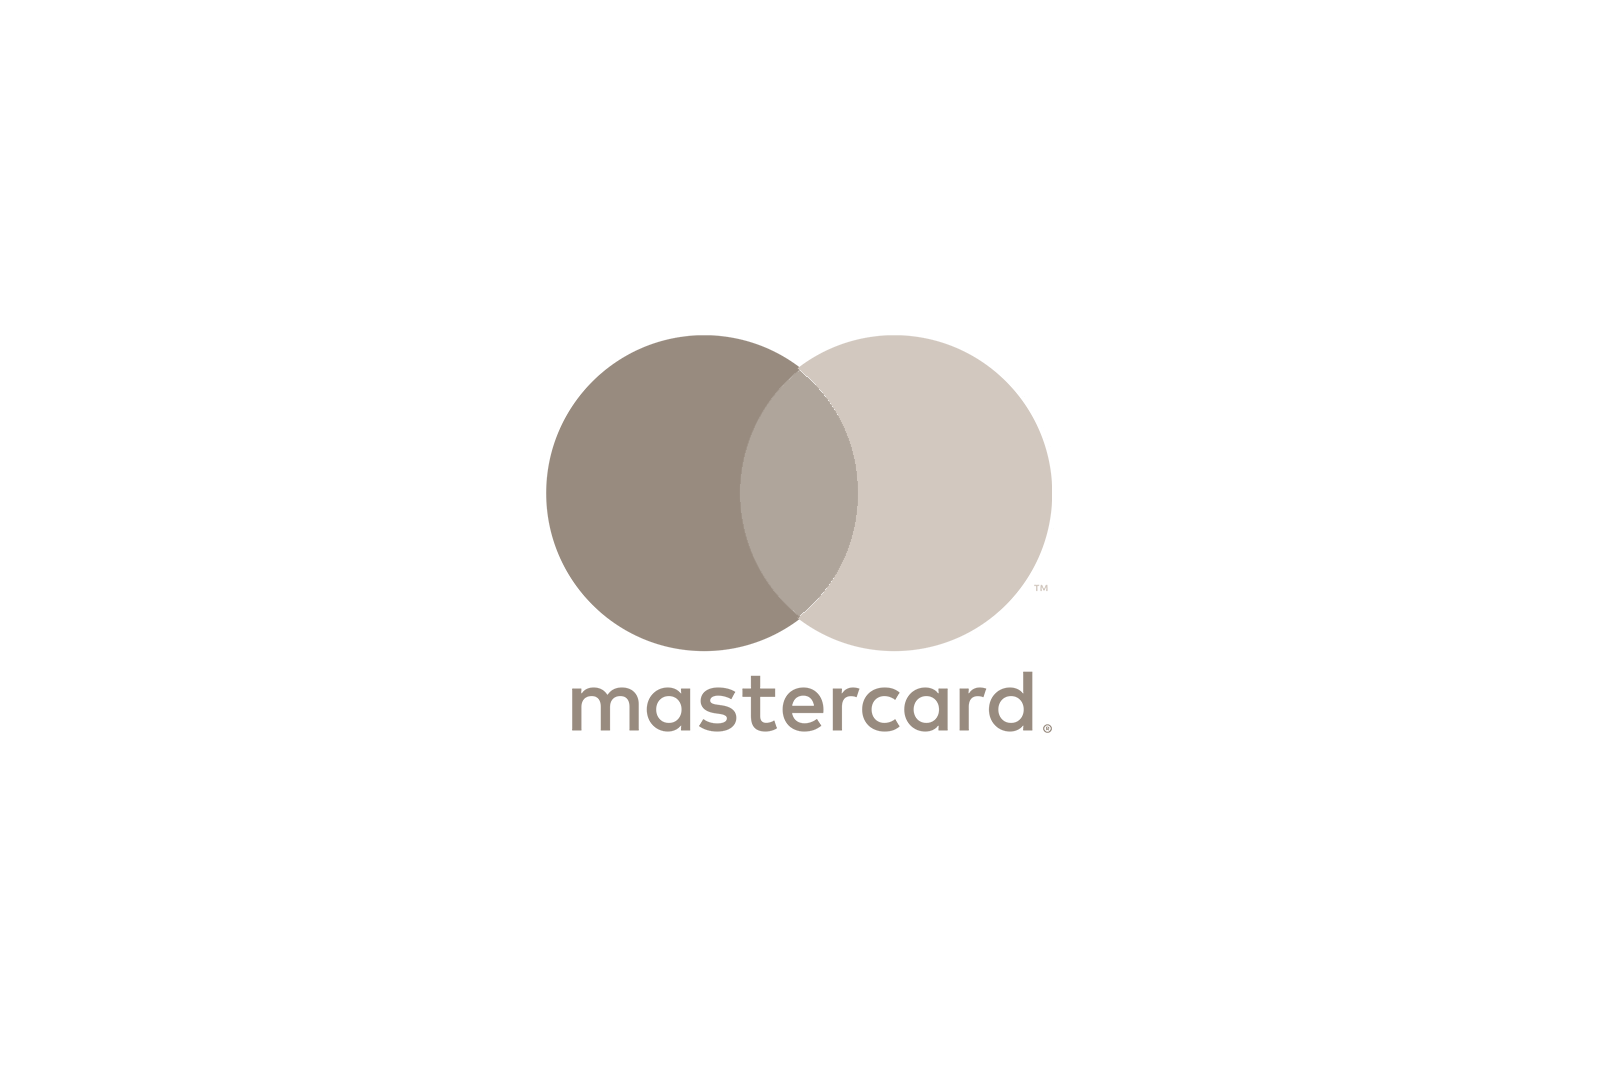 Marlee-Maclean_Logo_mastercard.png